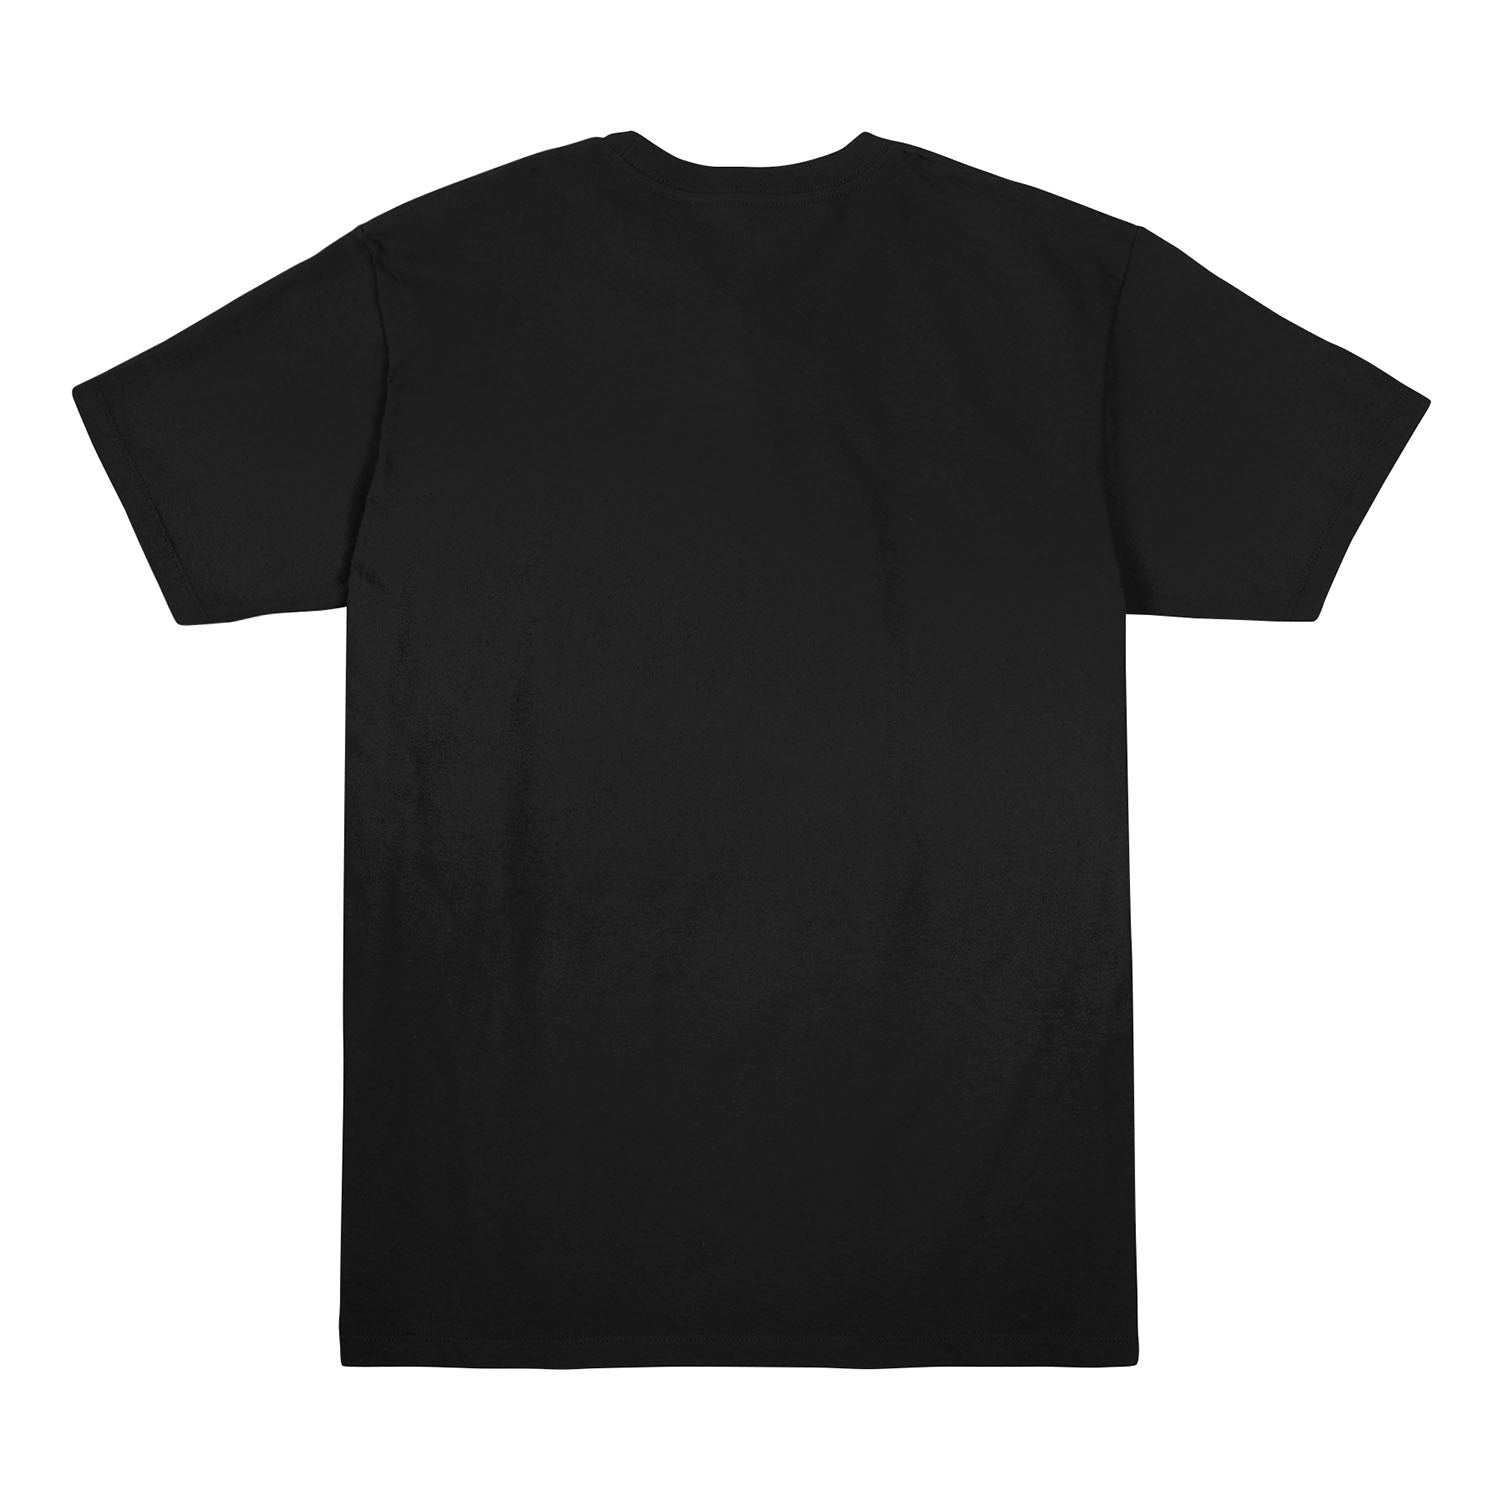 Call of Duty Task Force 141 Logo Black T-Shirt - Back View